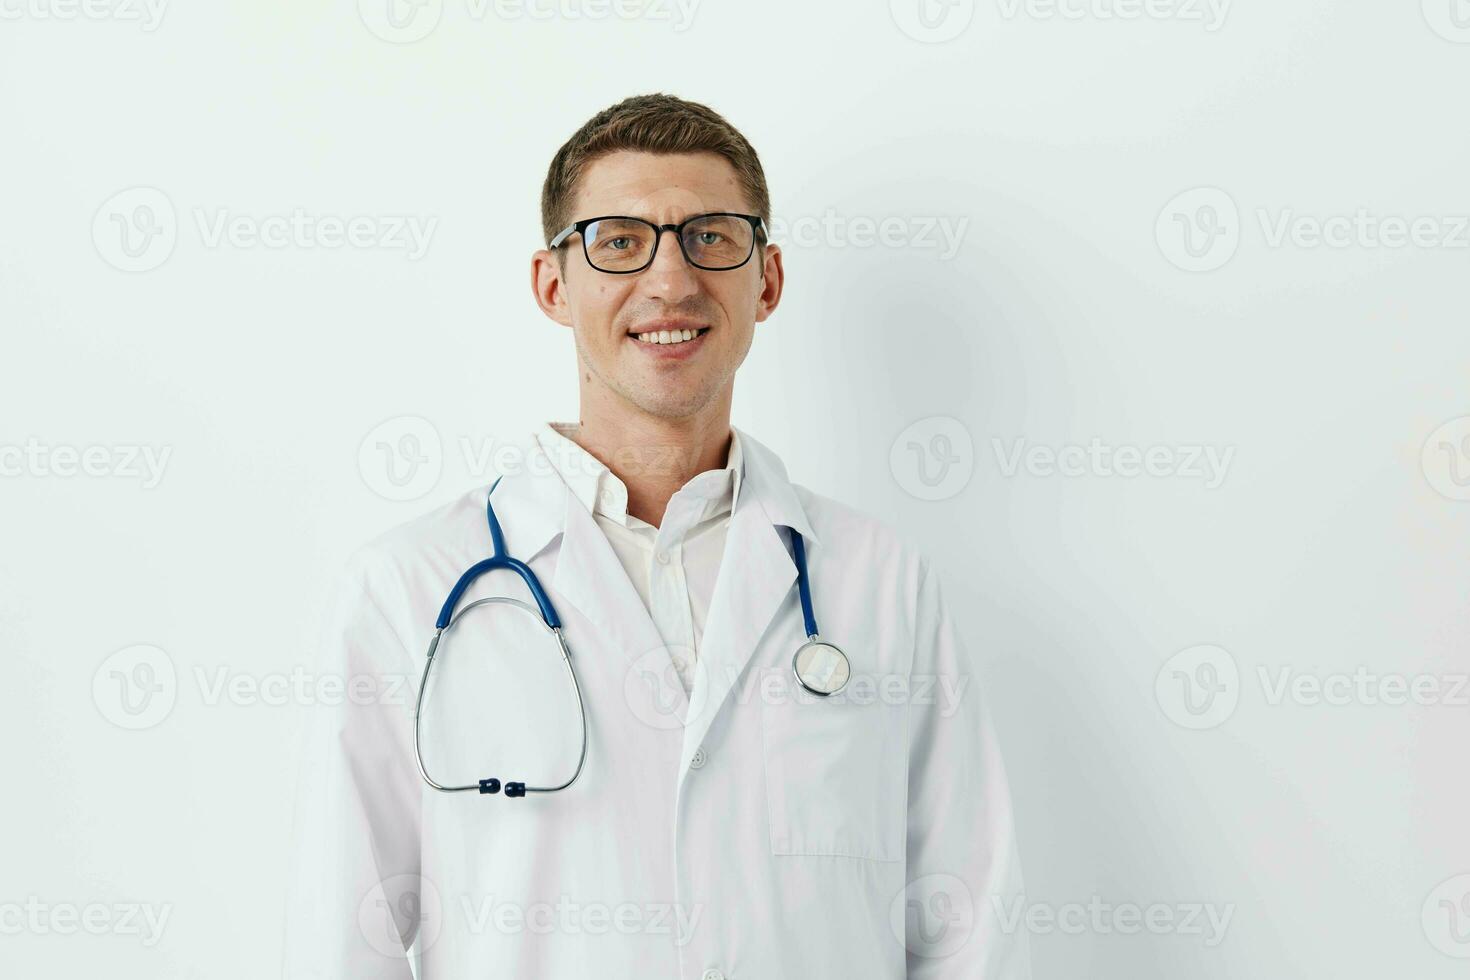 Doctor stethoscope adult health confident health uniform hospital care men men portrait medic photo